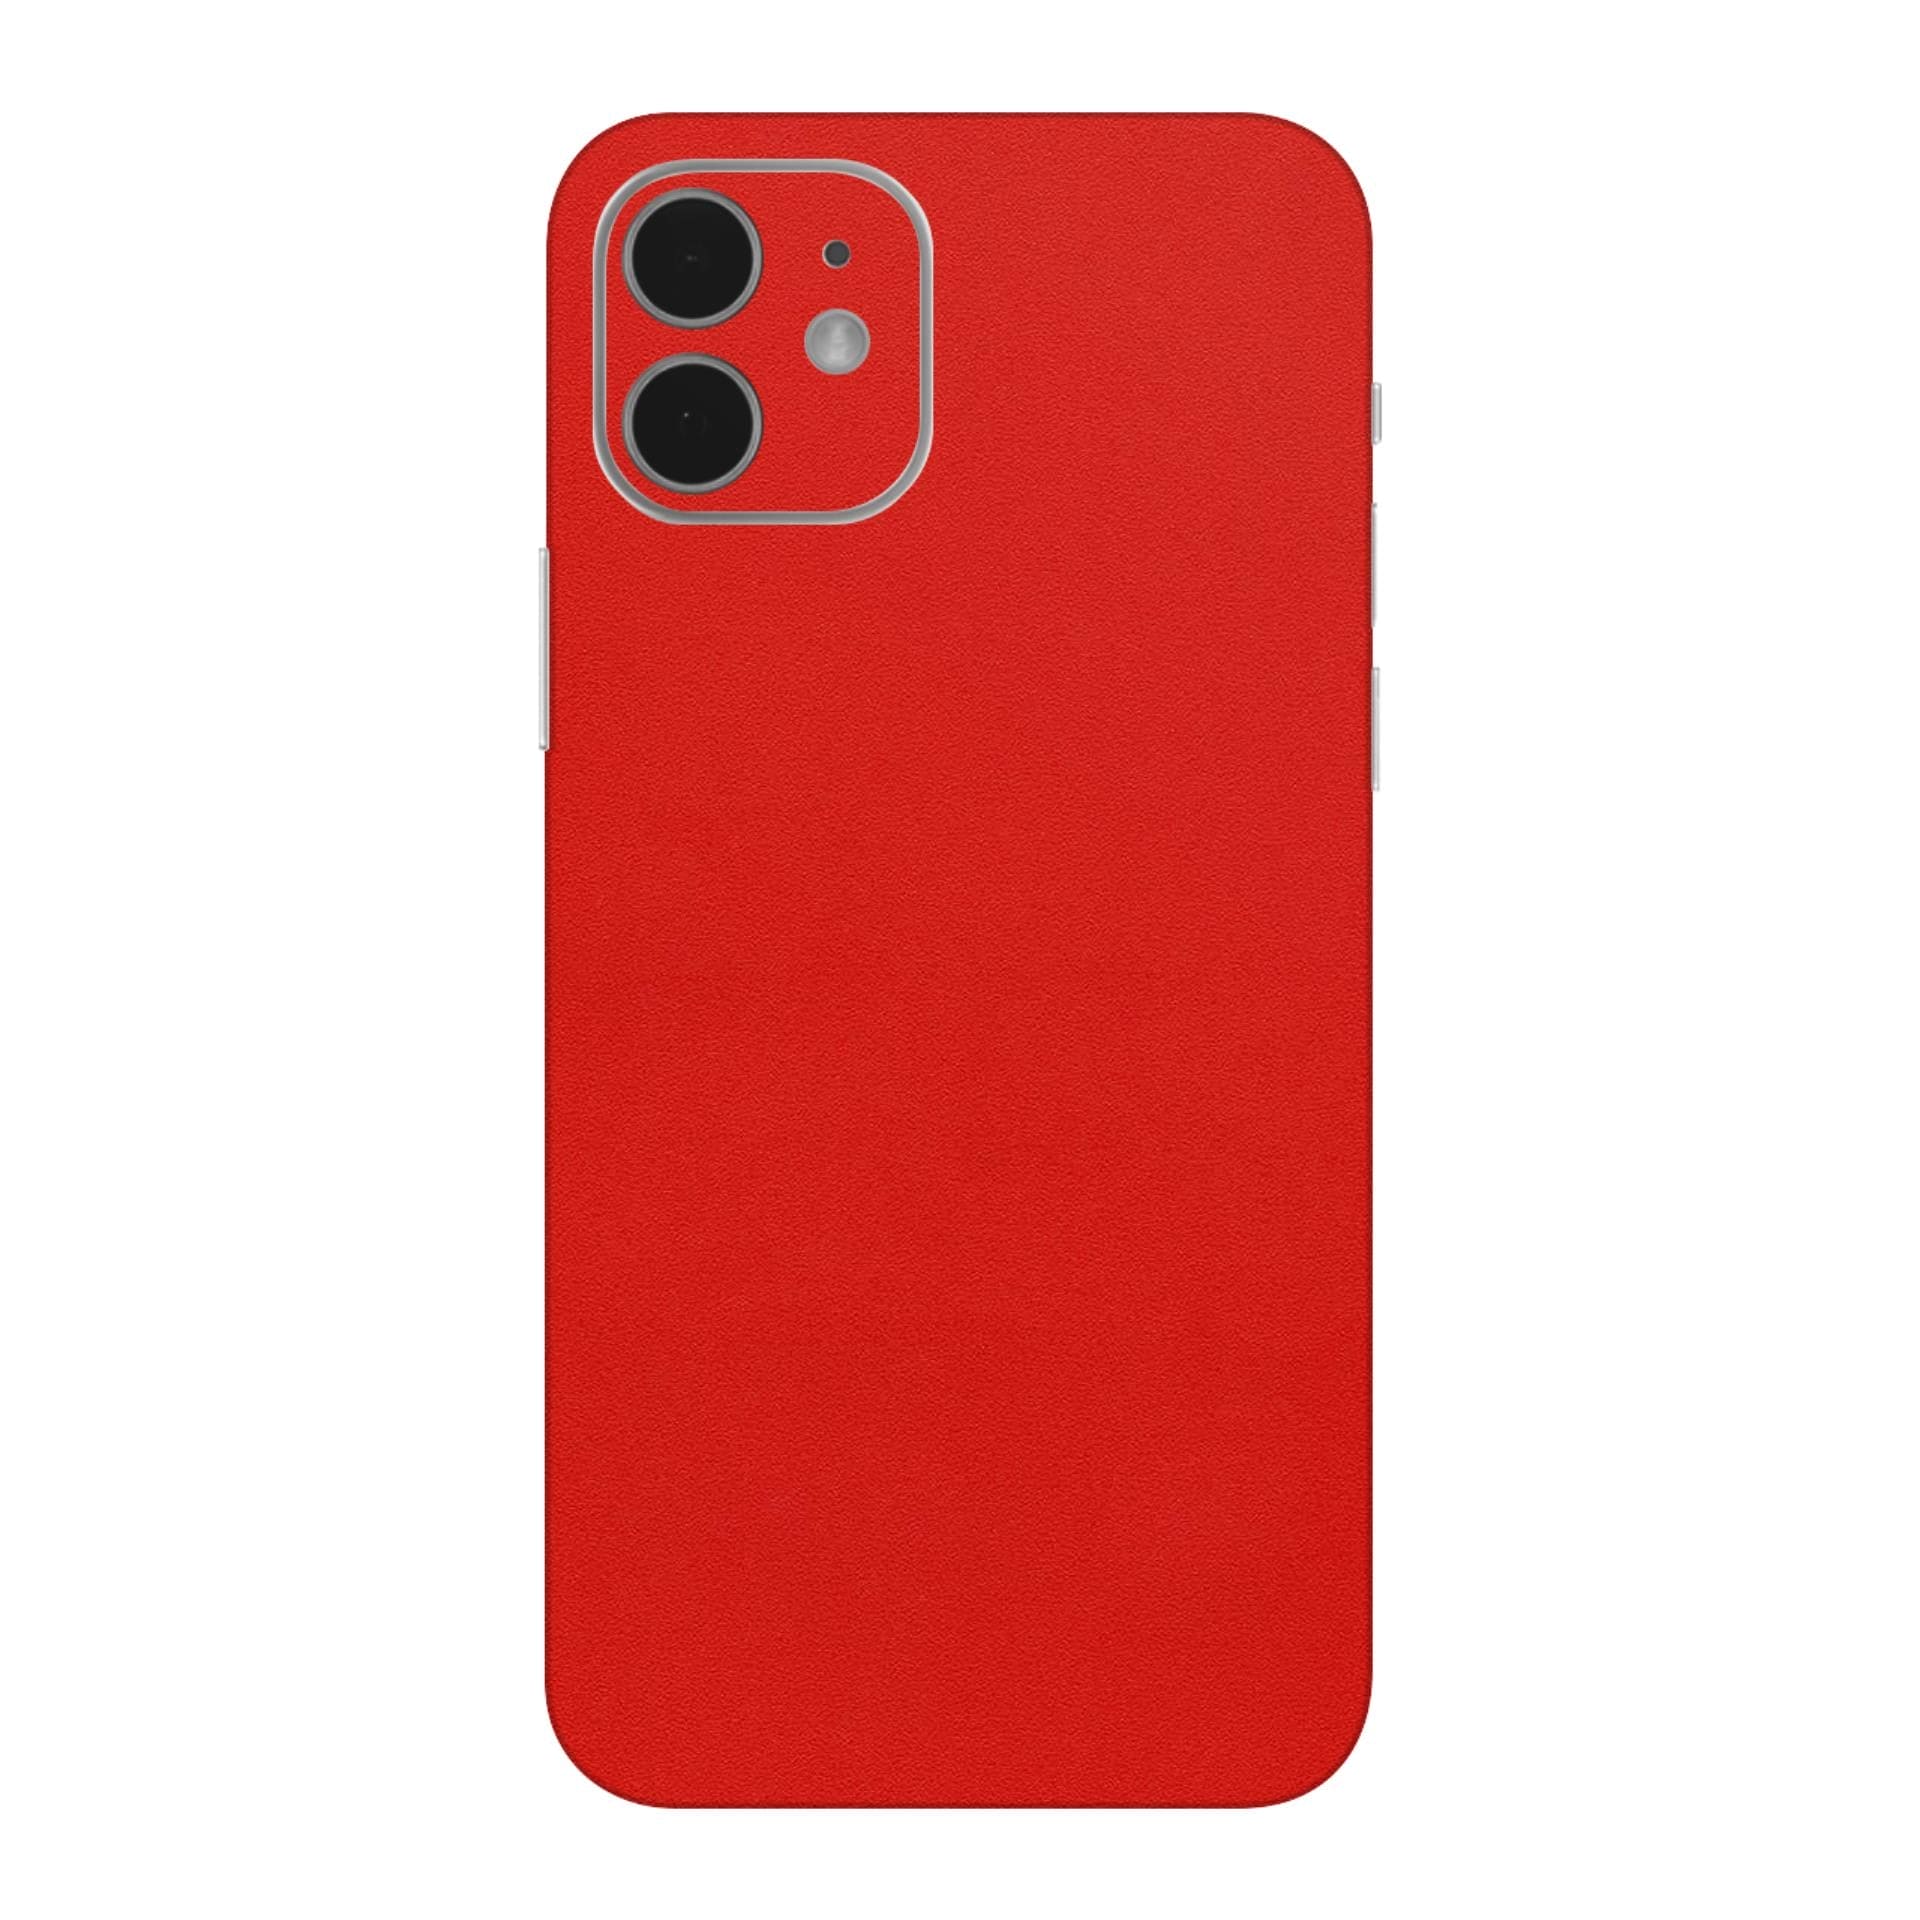 iphone 12 mini Matte Red skins